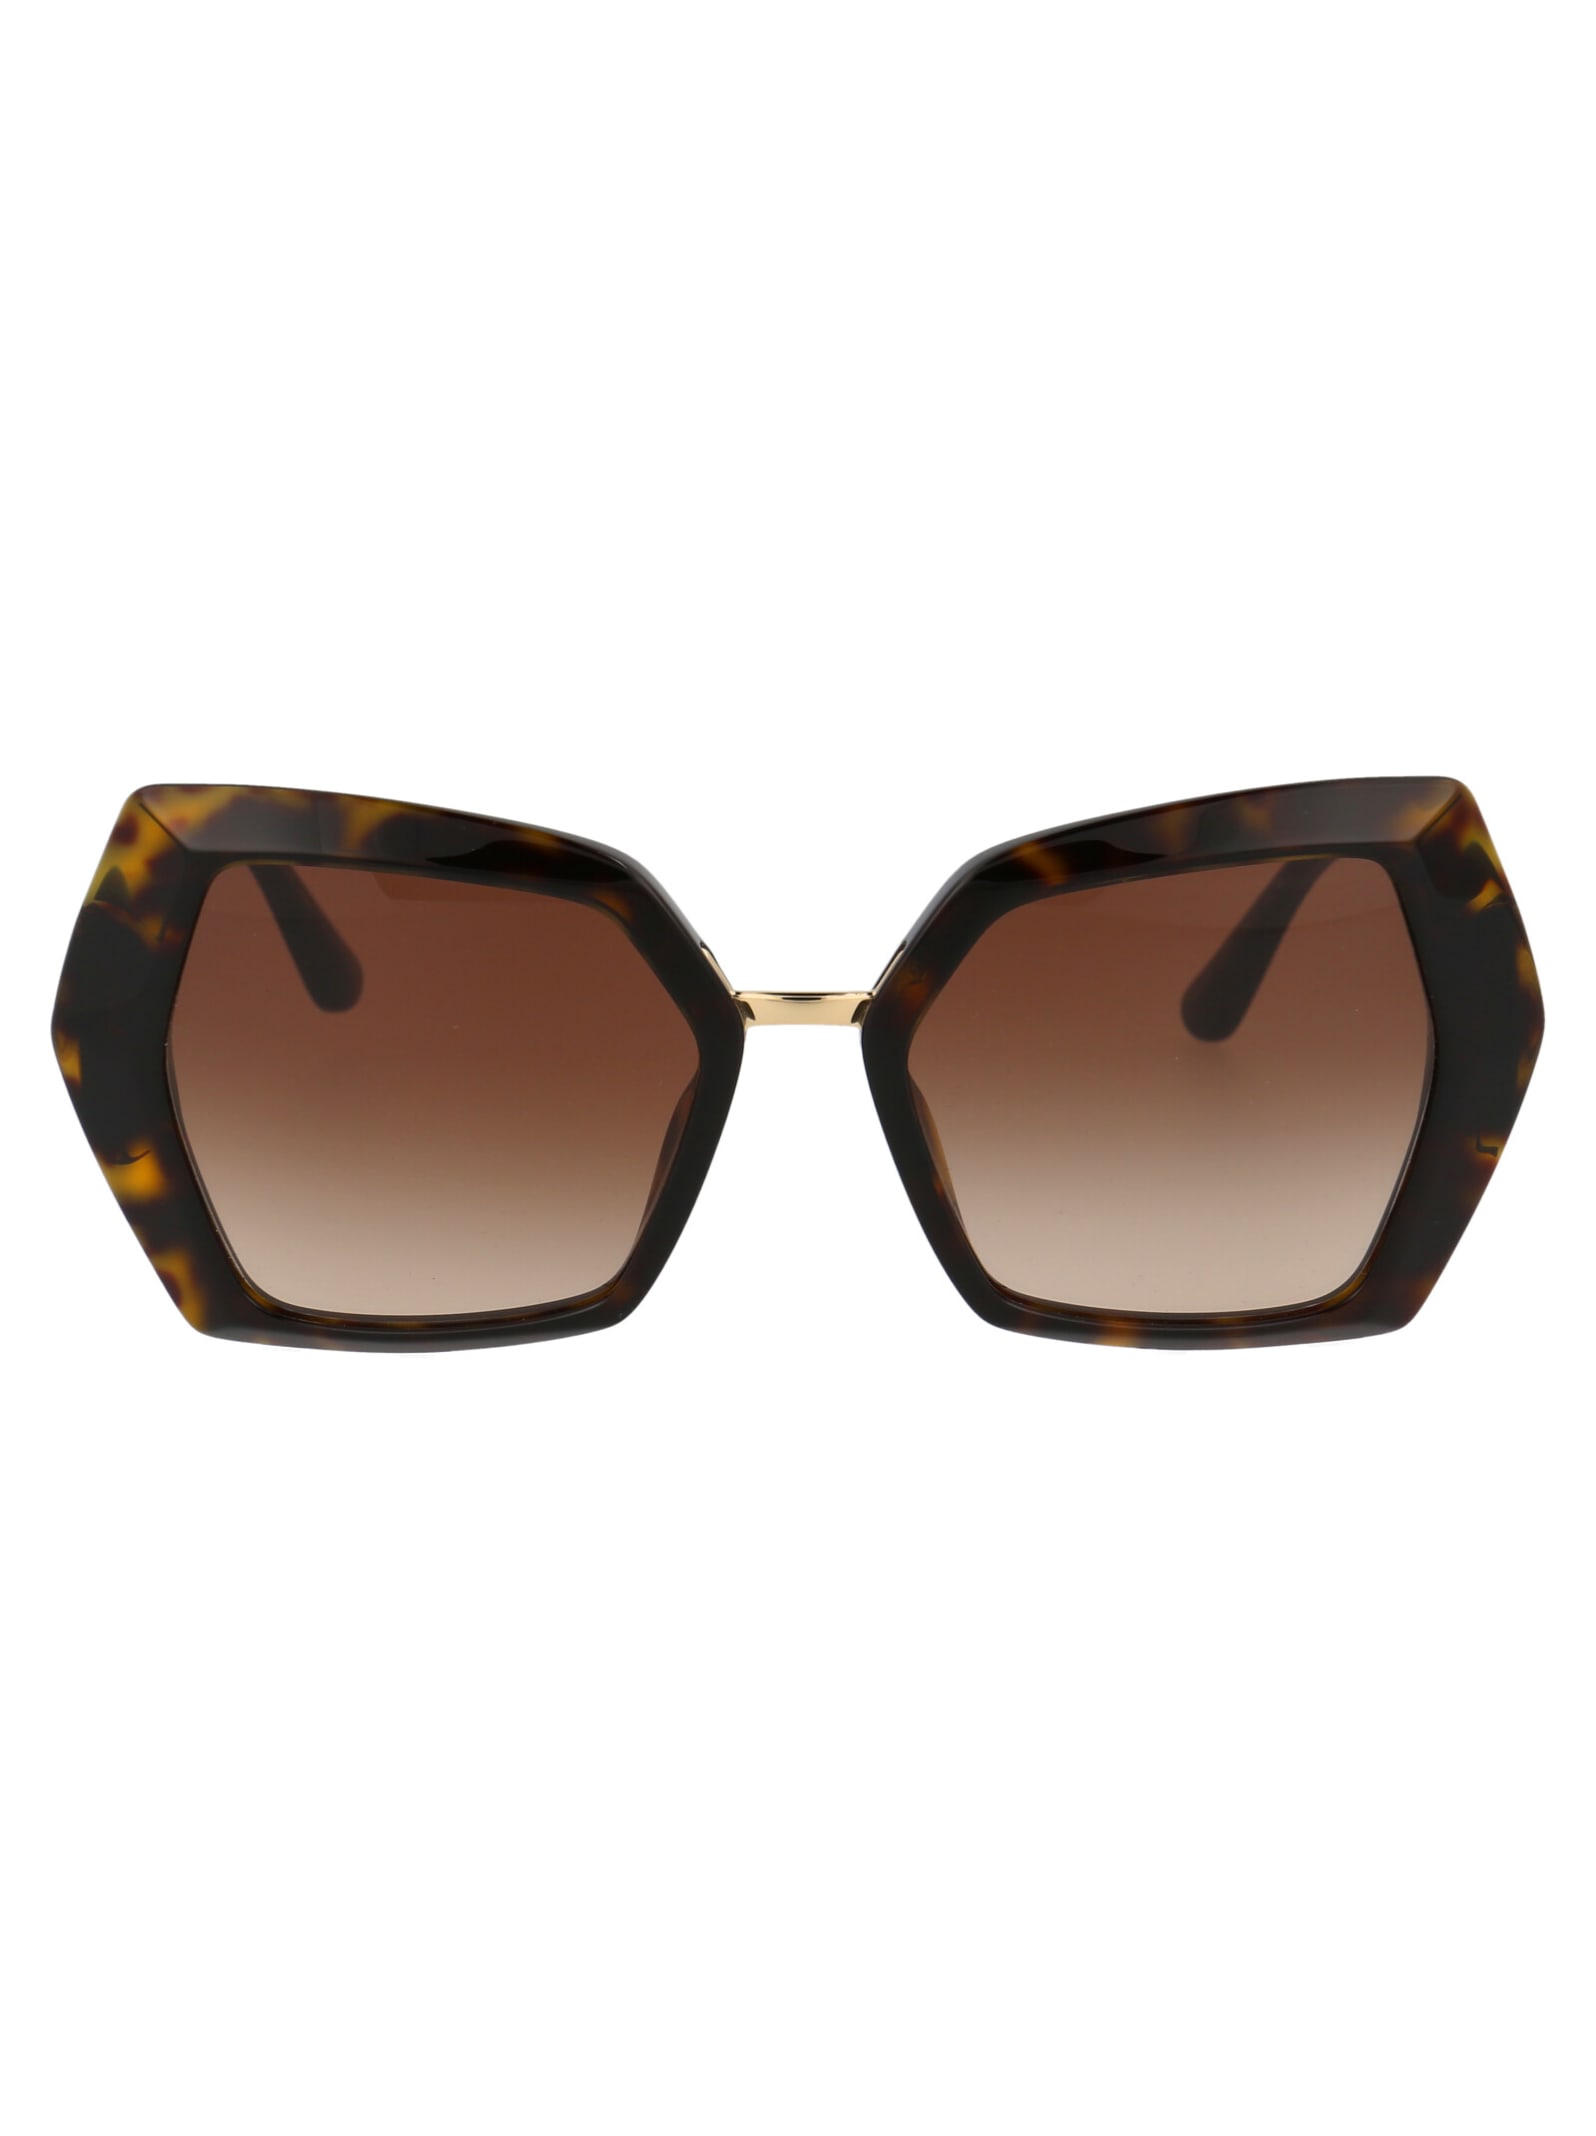 Dolce & Gabbana 0dg4377 Sunglasses